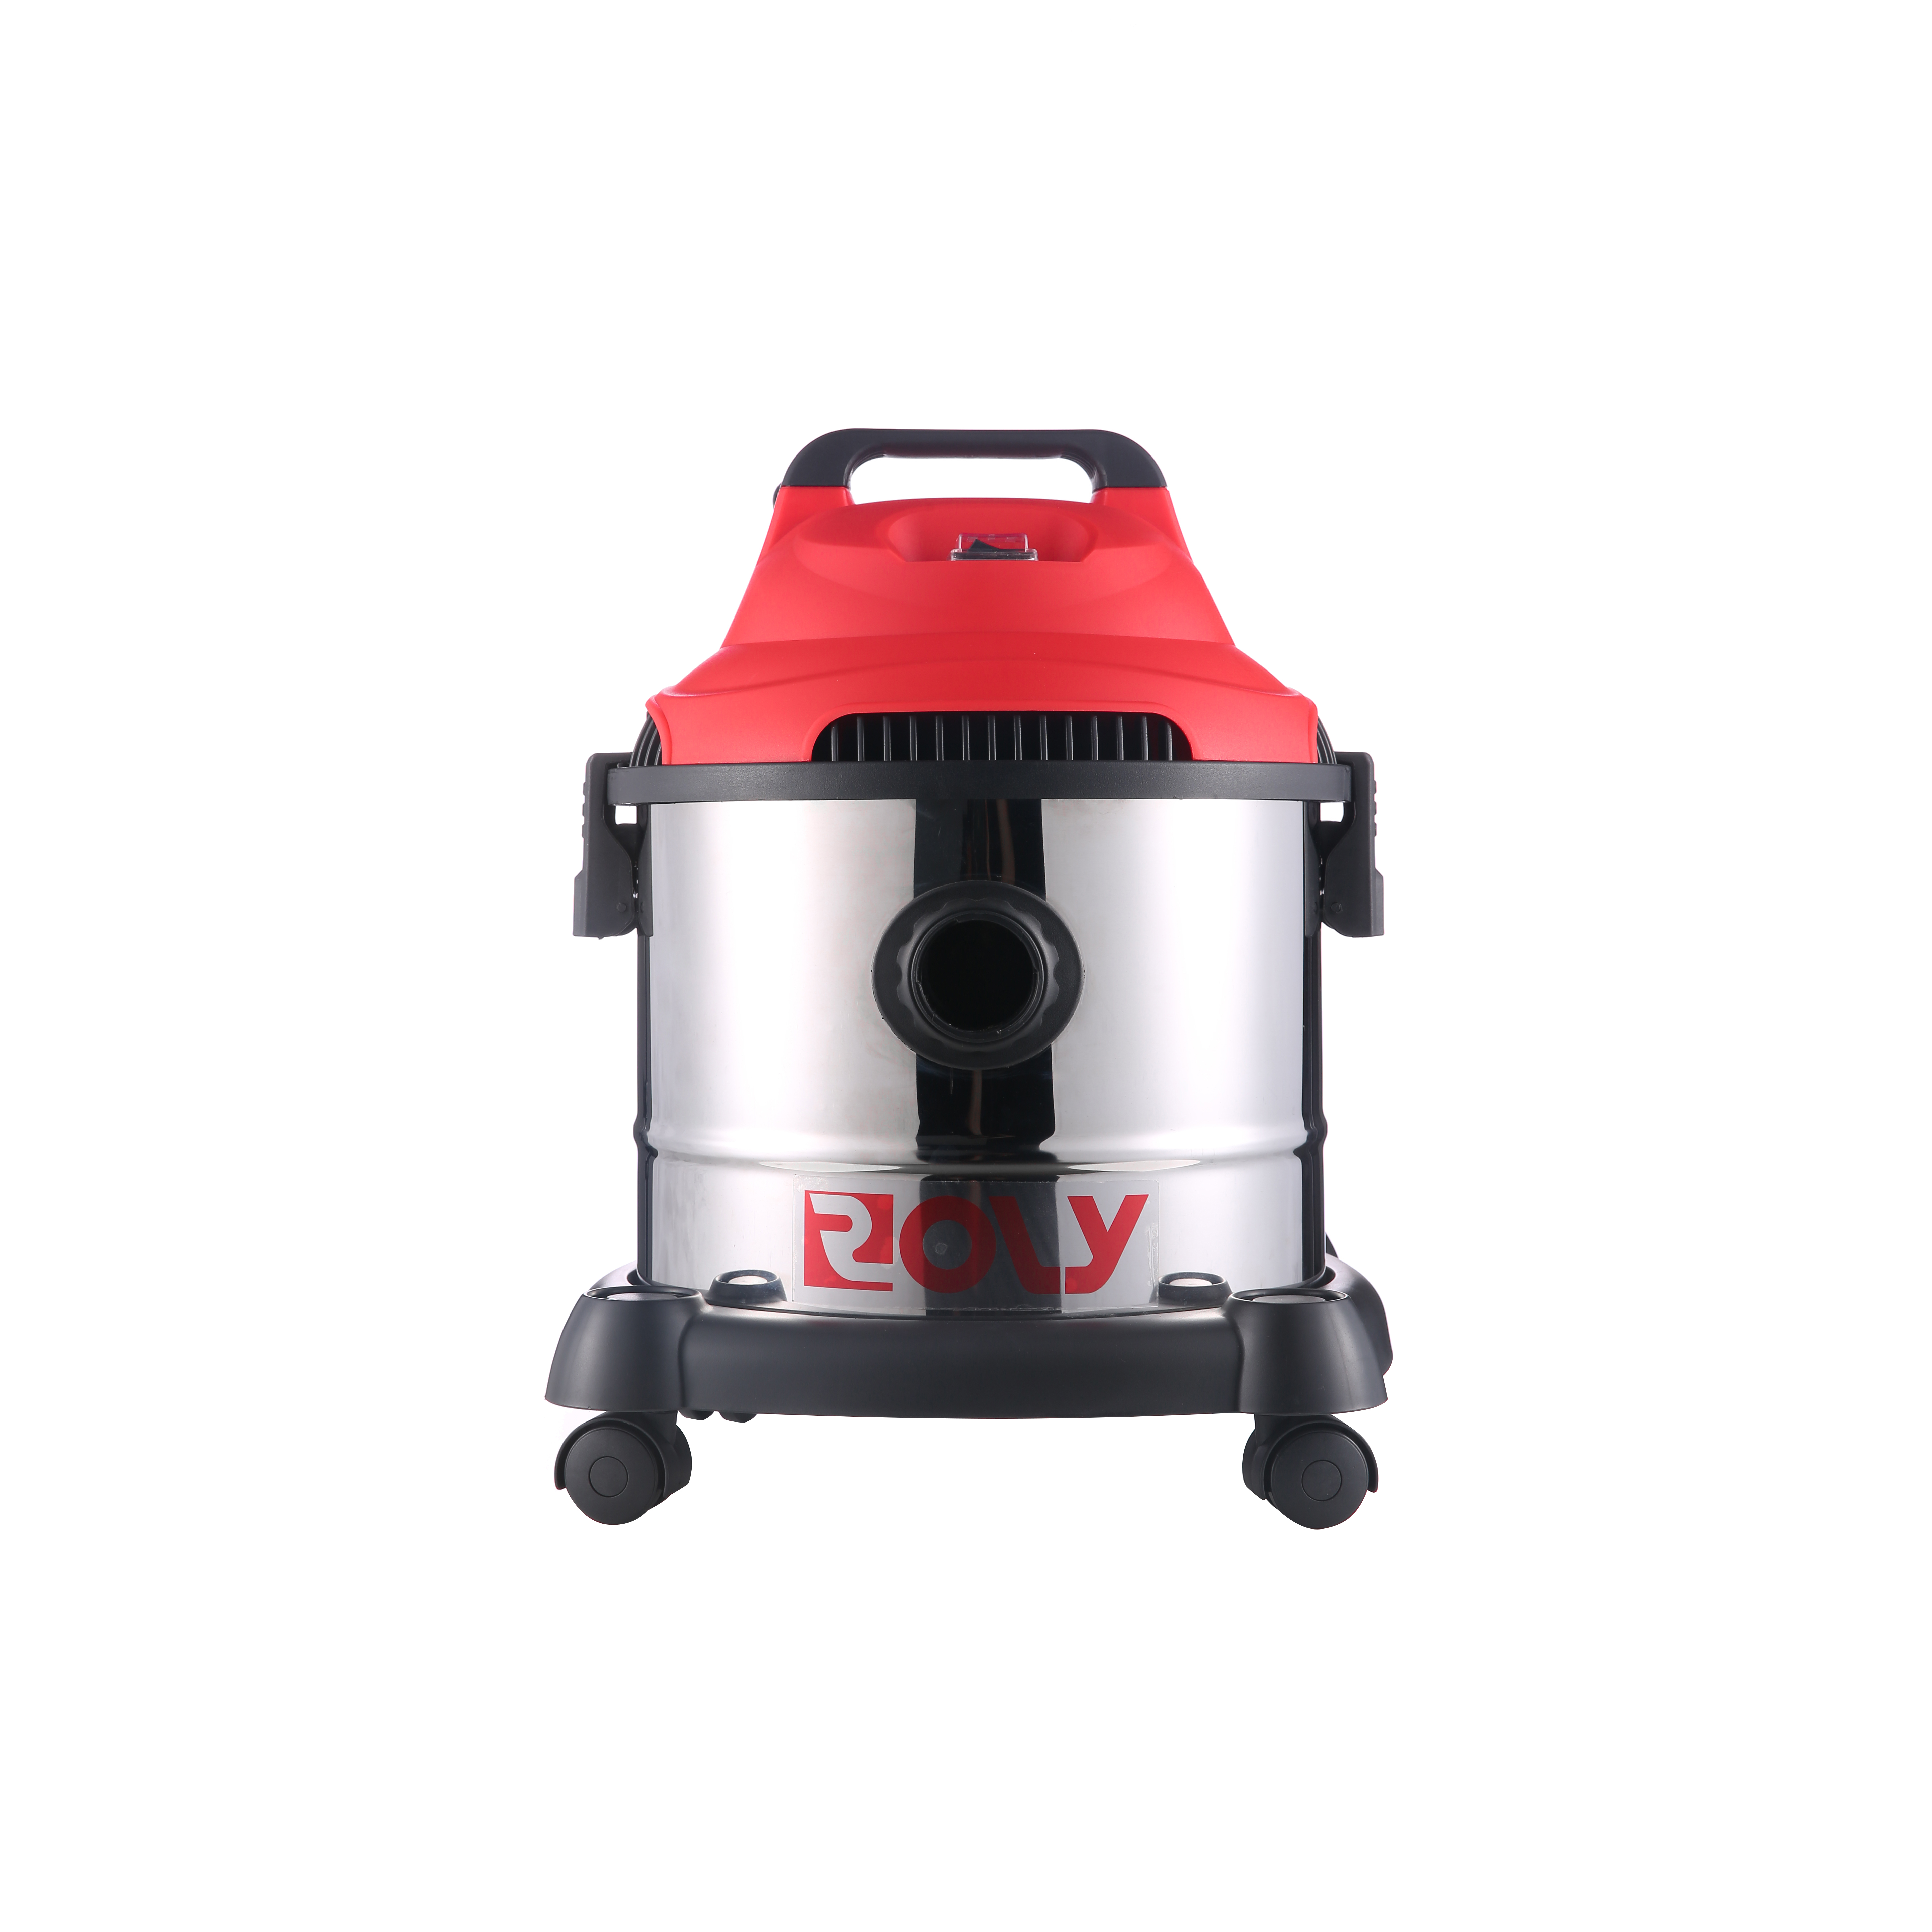 RL128 high quality bagless hepa filter cyclone vacuum cleaner